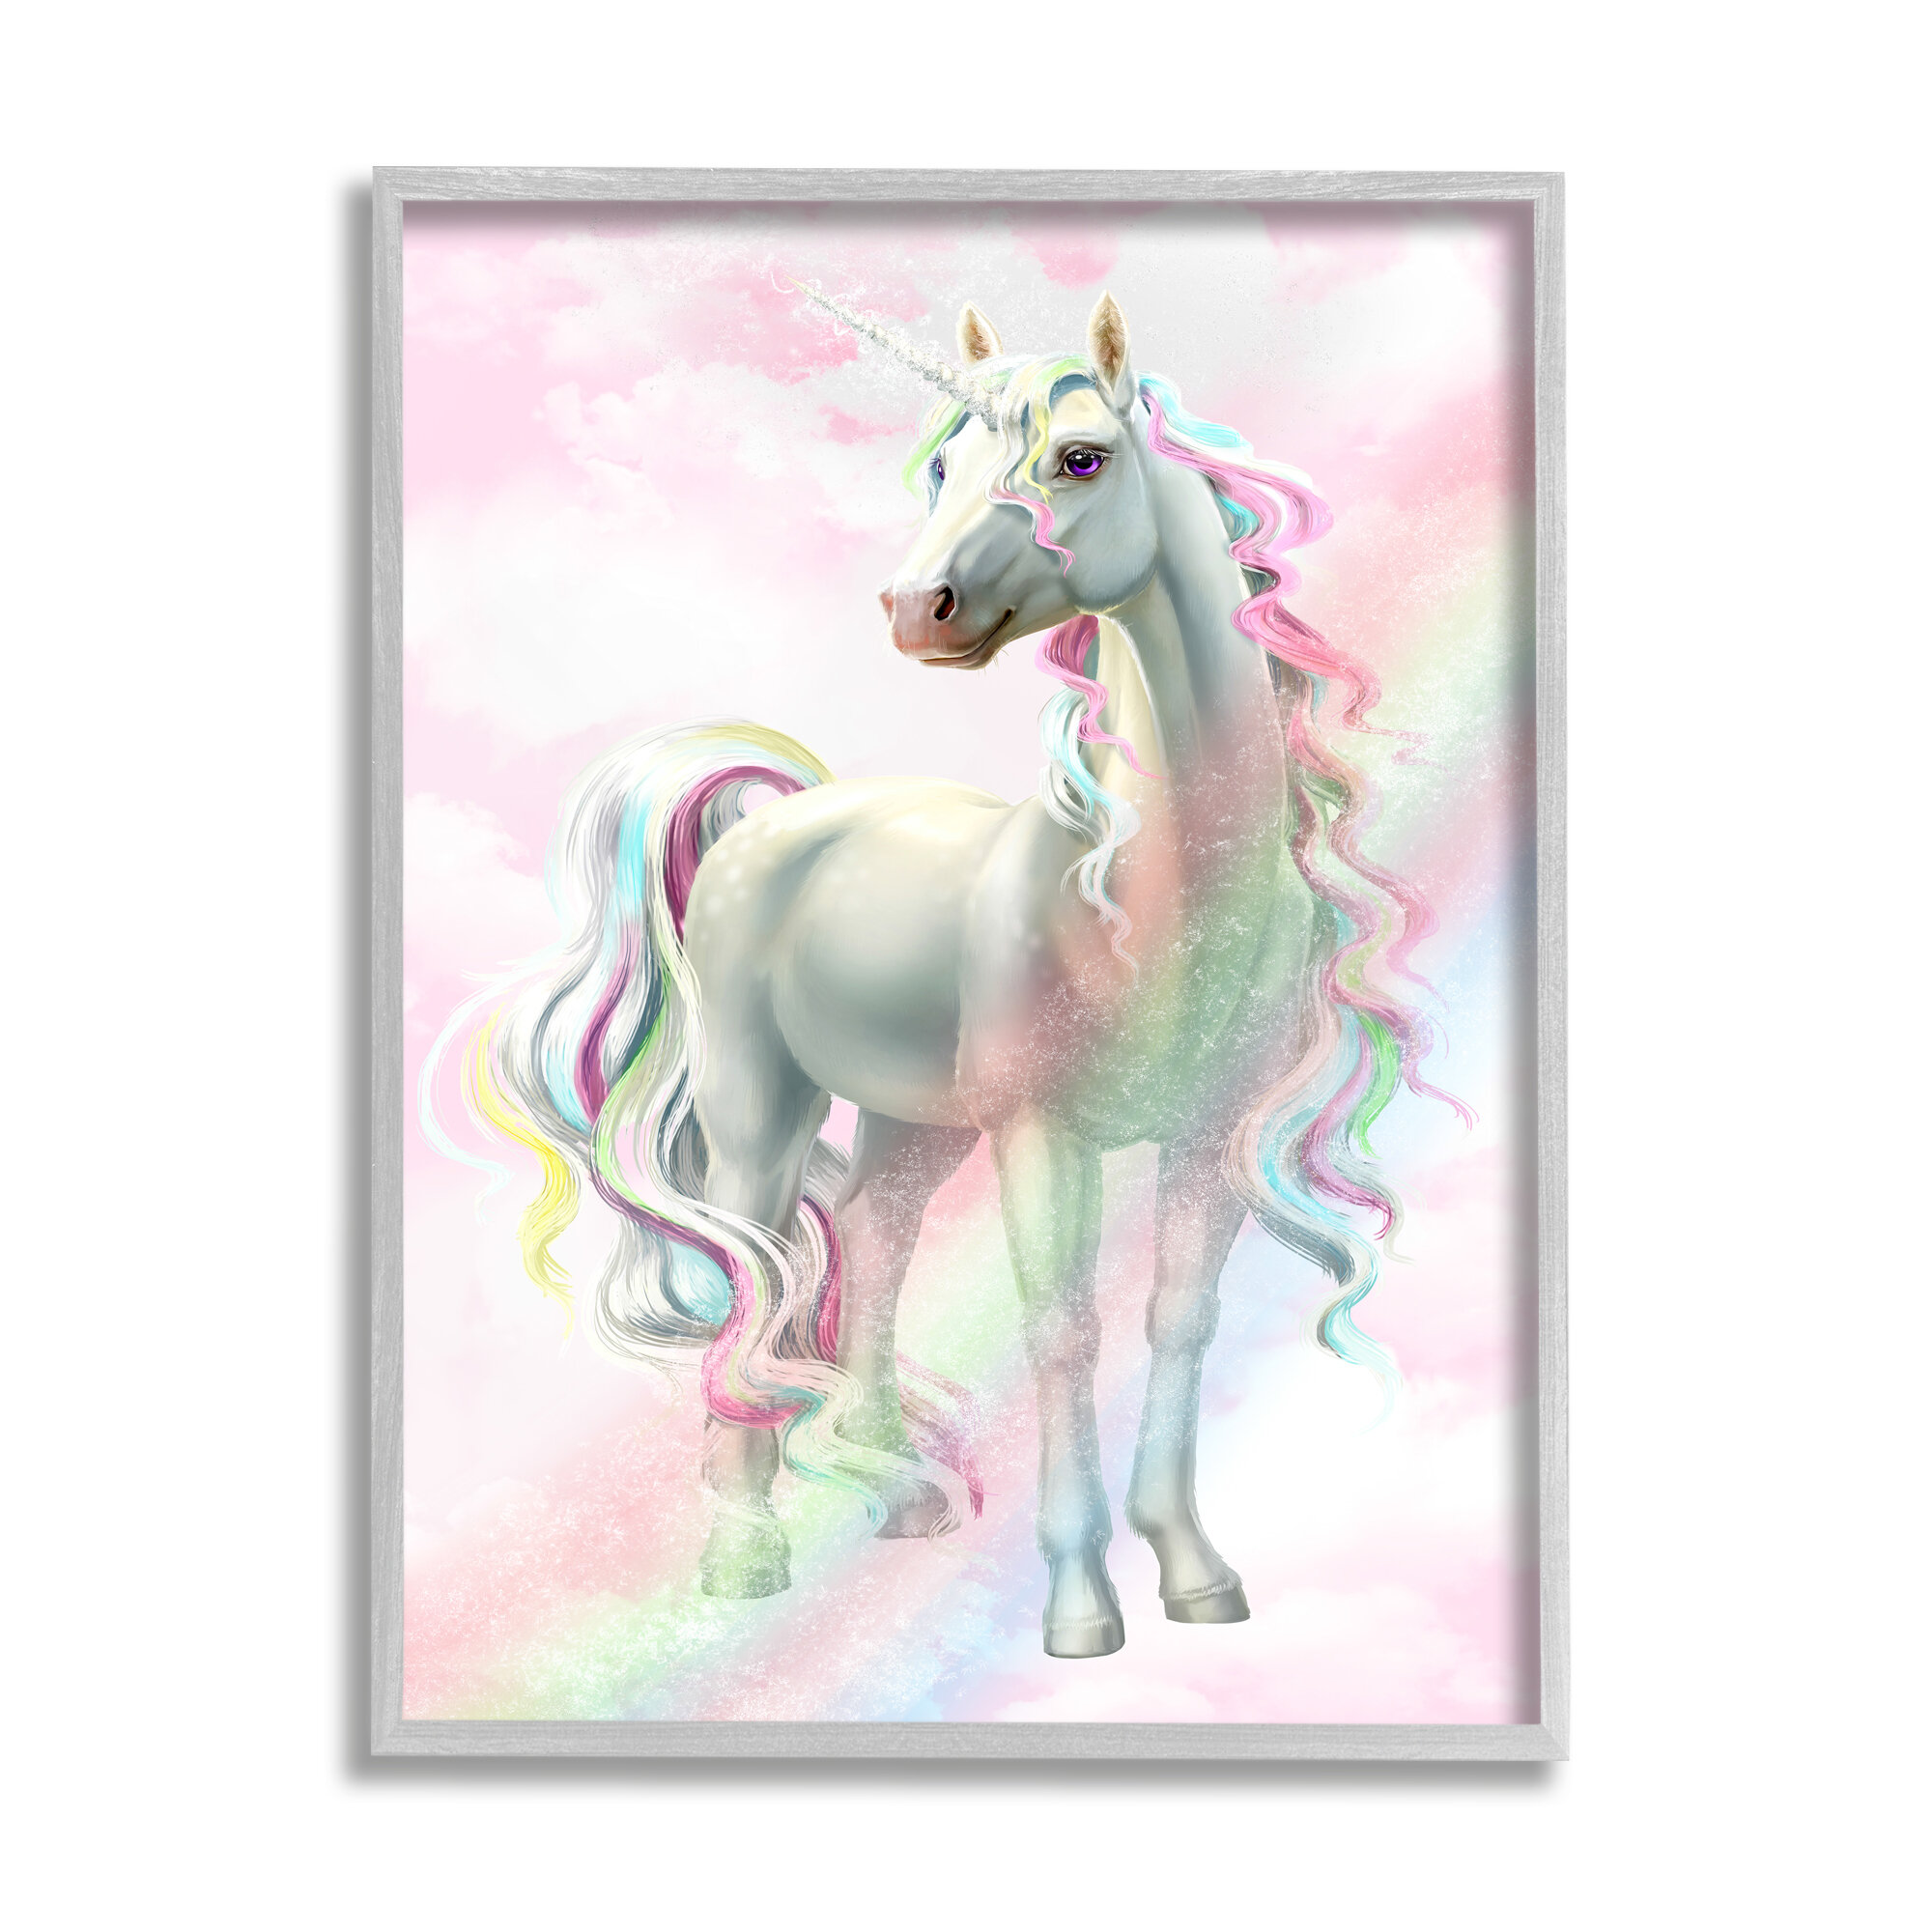 Unicorn Wall Art Set, Printable Unicorn Art, Girls Room Decor, Unicorn Gold  Glitter, Unicorn Prints, Pink Blush Lilac Gold, Cloud Rainbow 